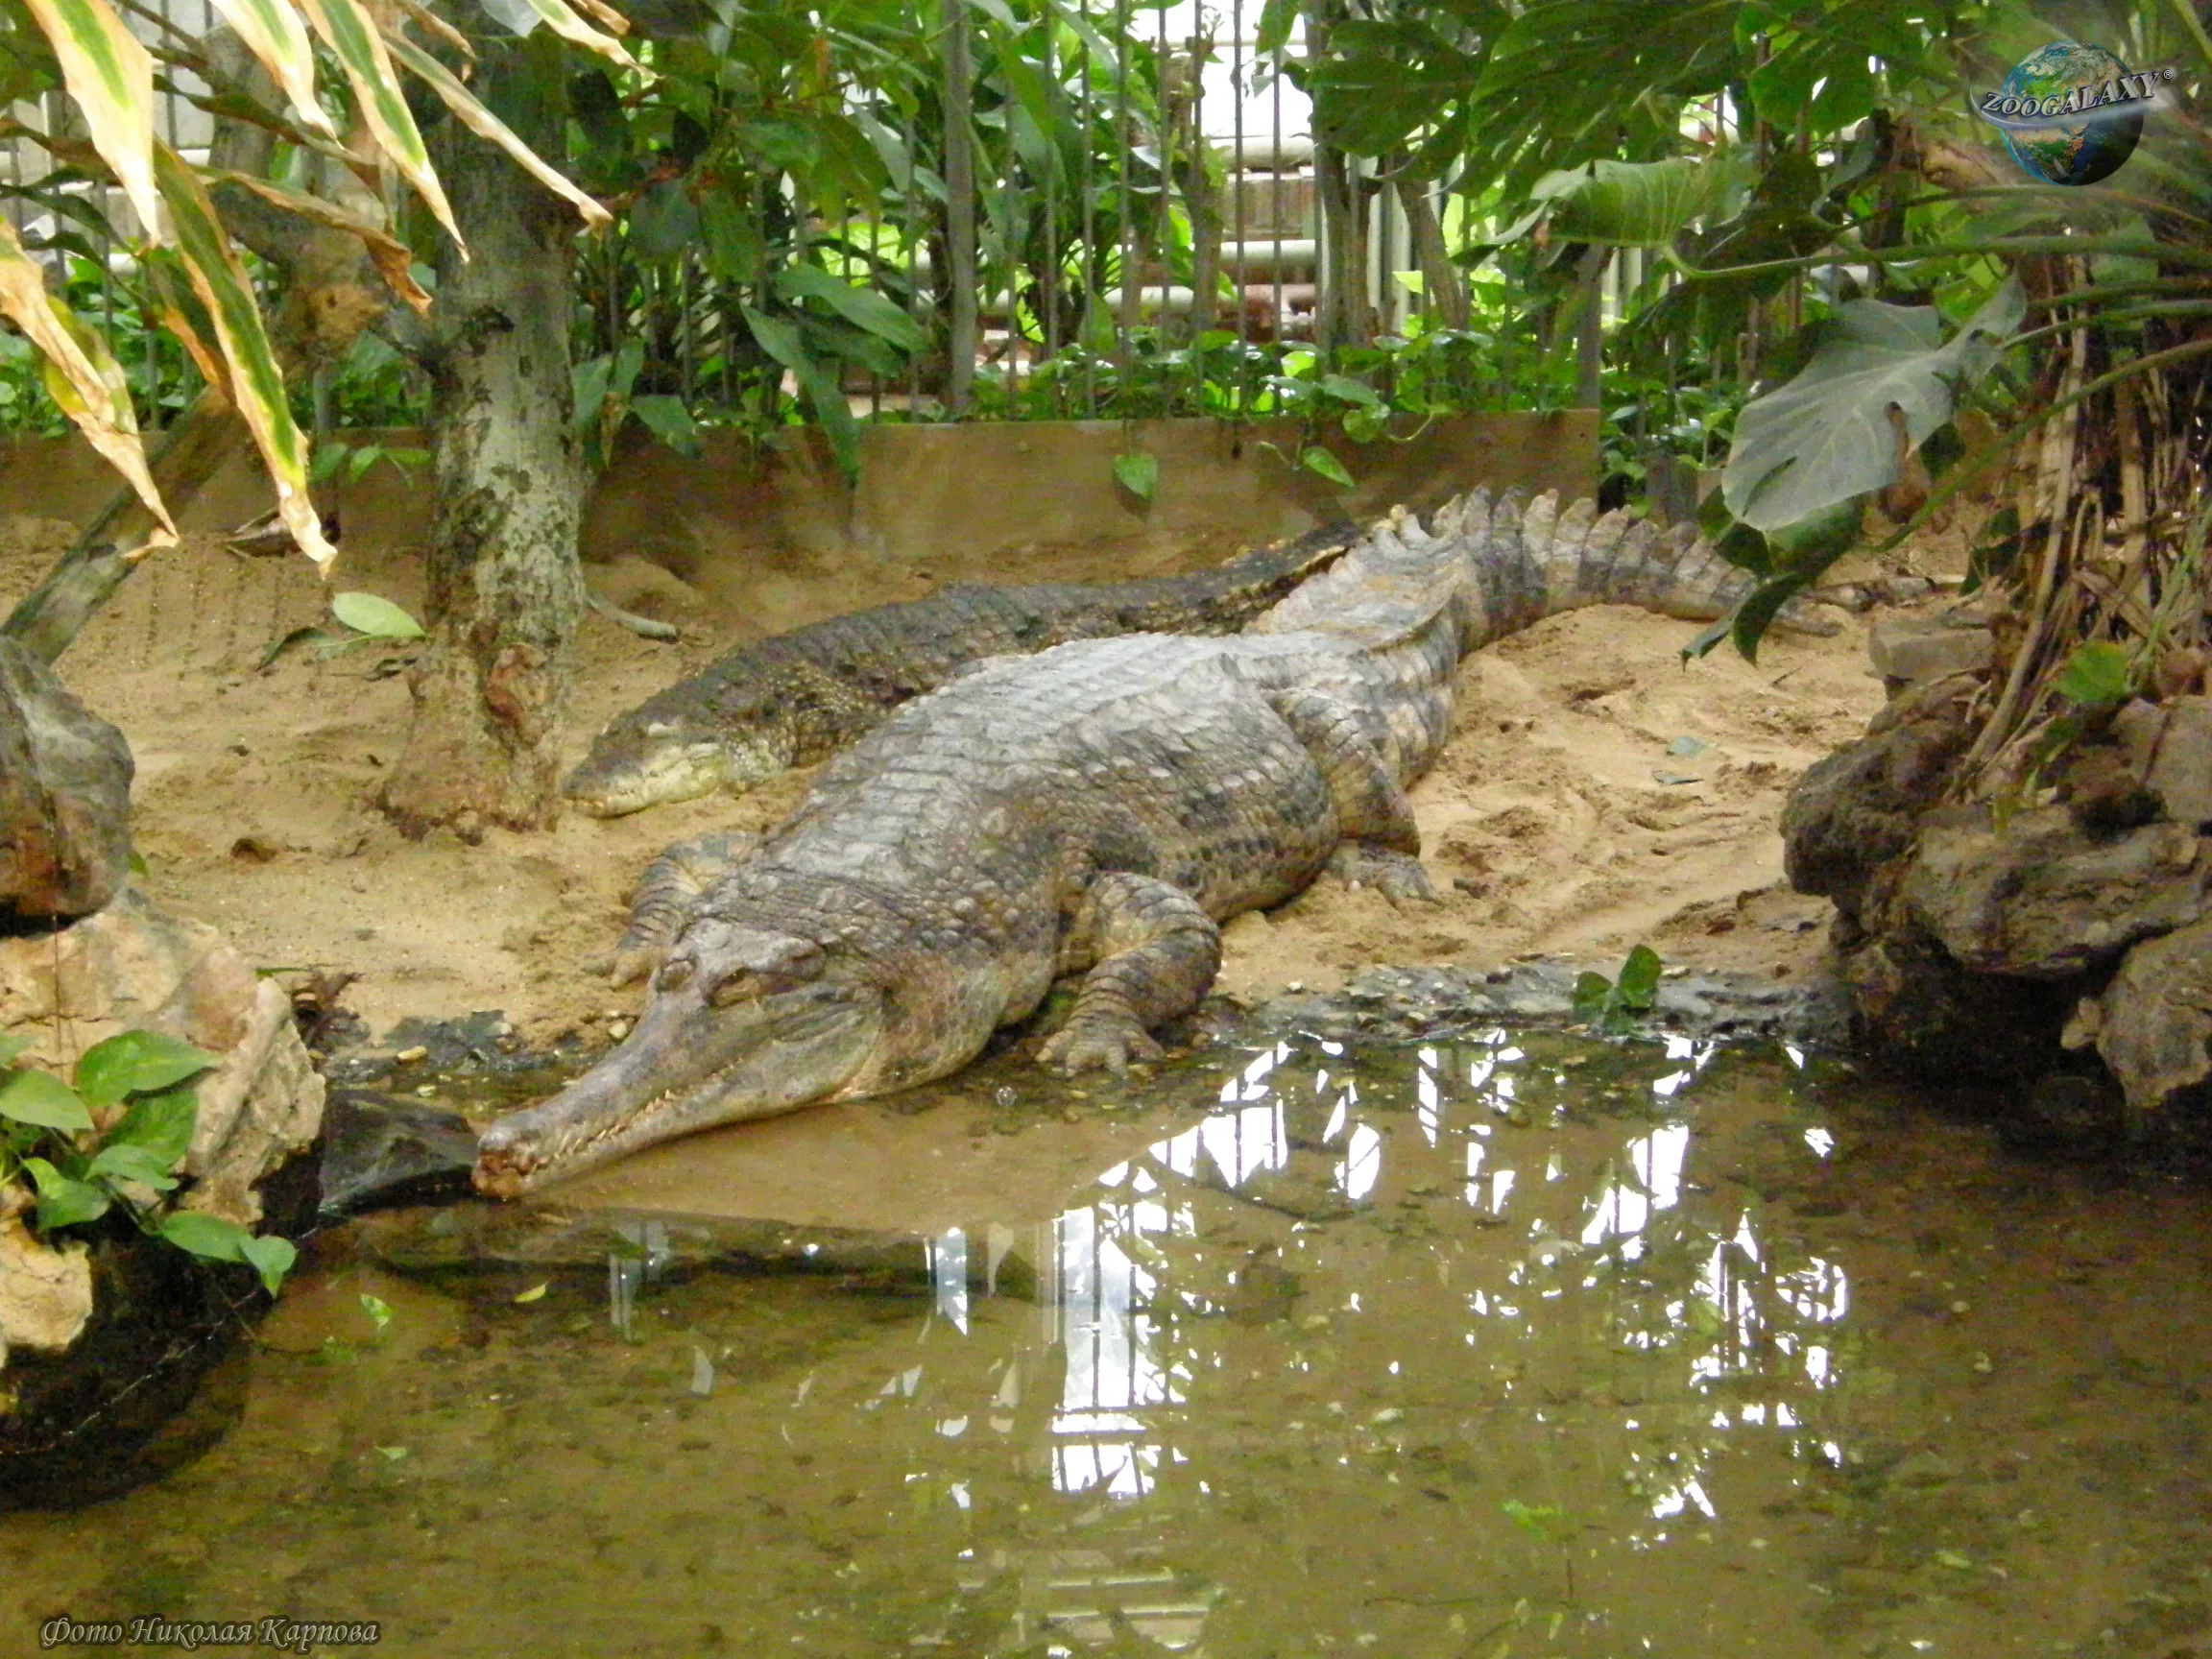 El gavial malayo, un reptil muy peculiar